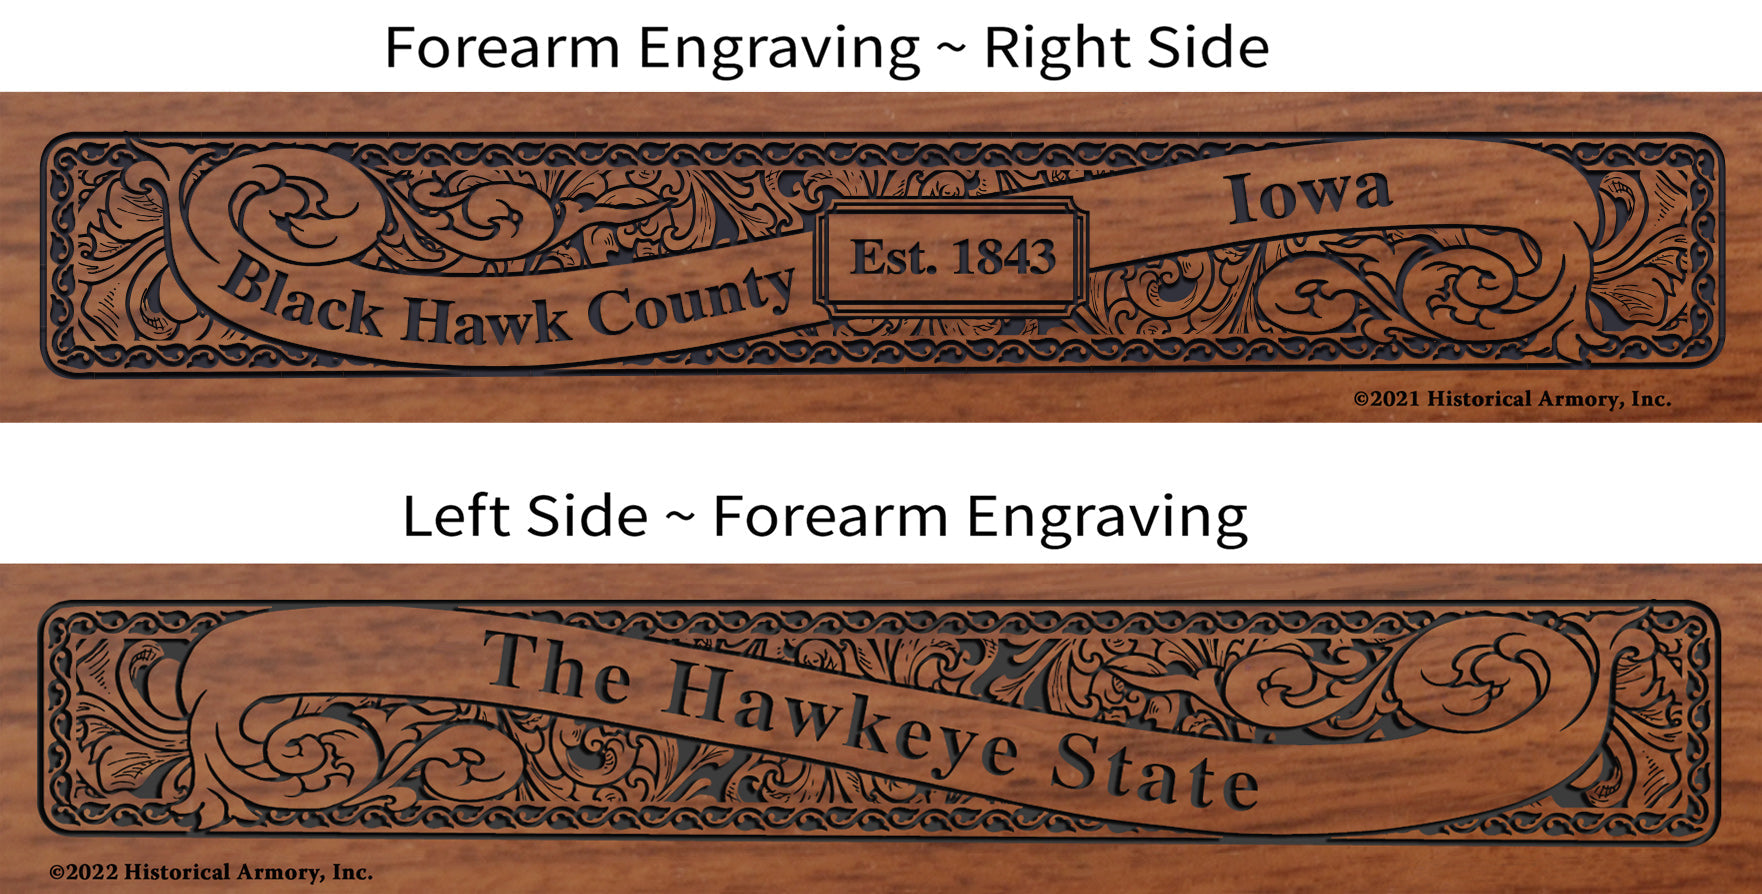 Black Hawk County Iowa Engraved Rifle Forearm